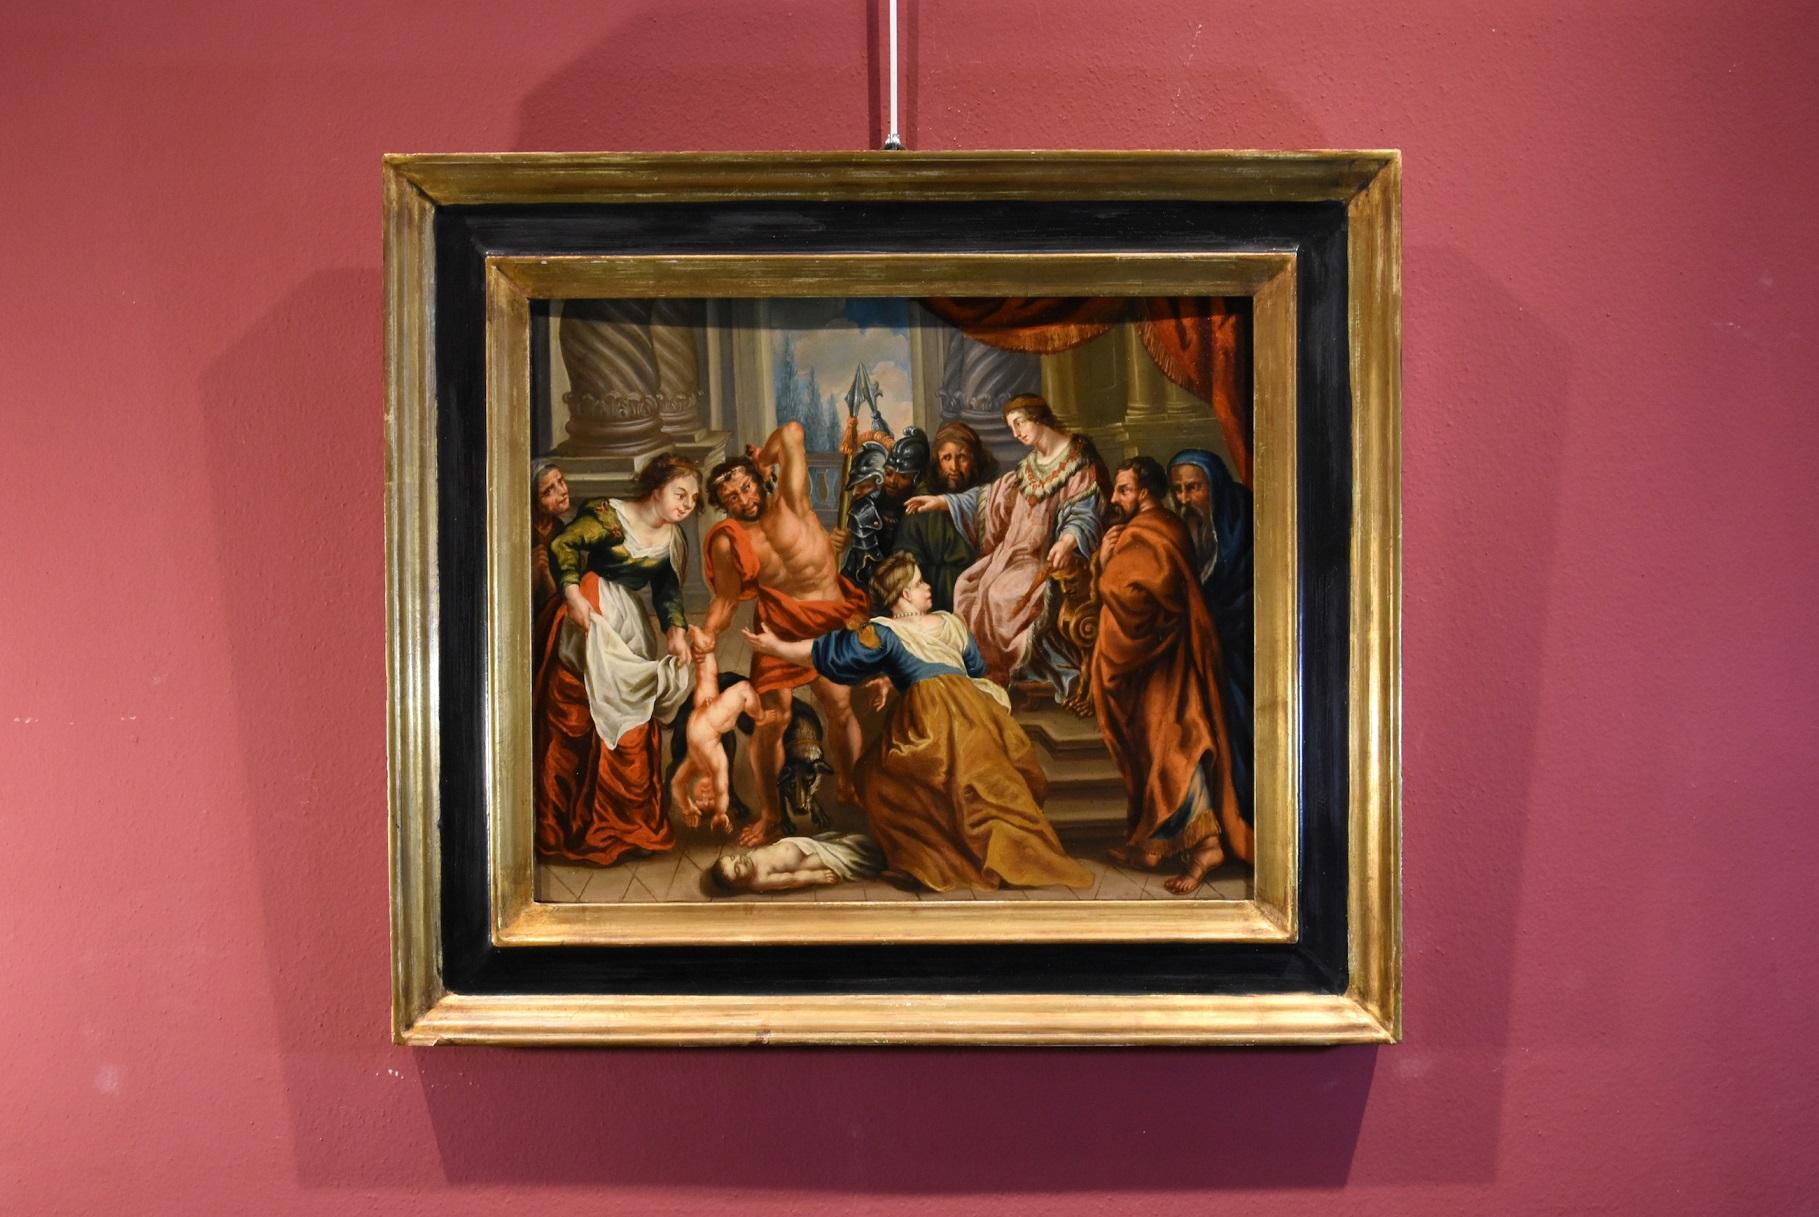 King Solomon Rubens Paint Oil on copper 17th Century Old master Flemish Art For Sale 6